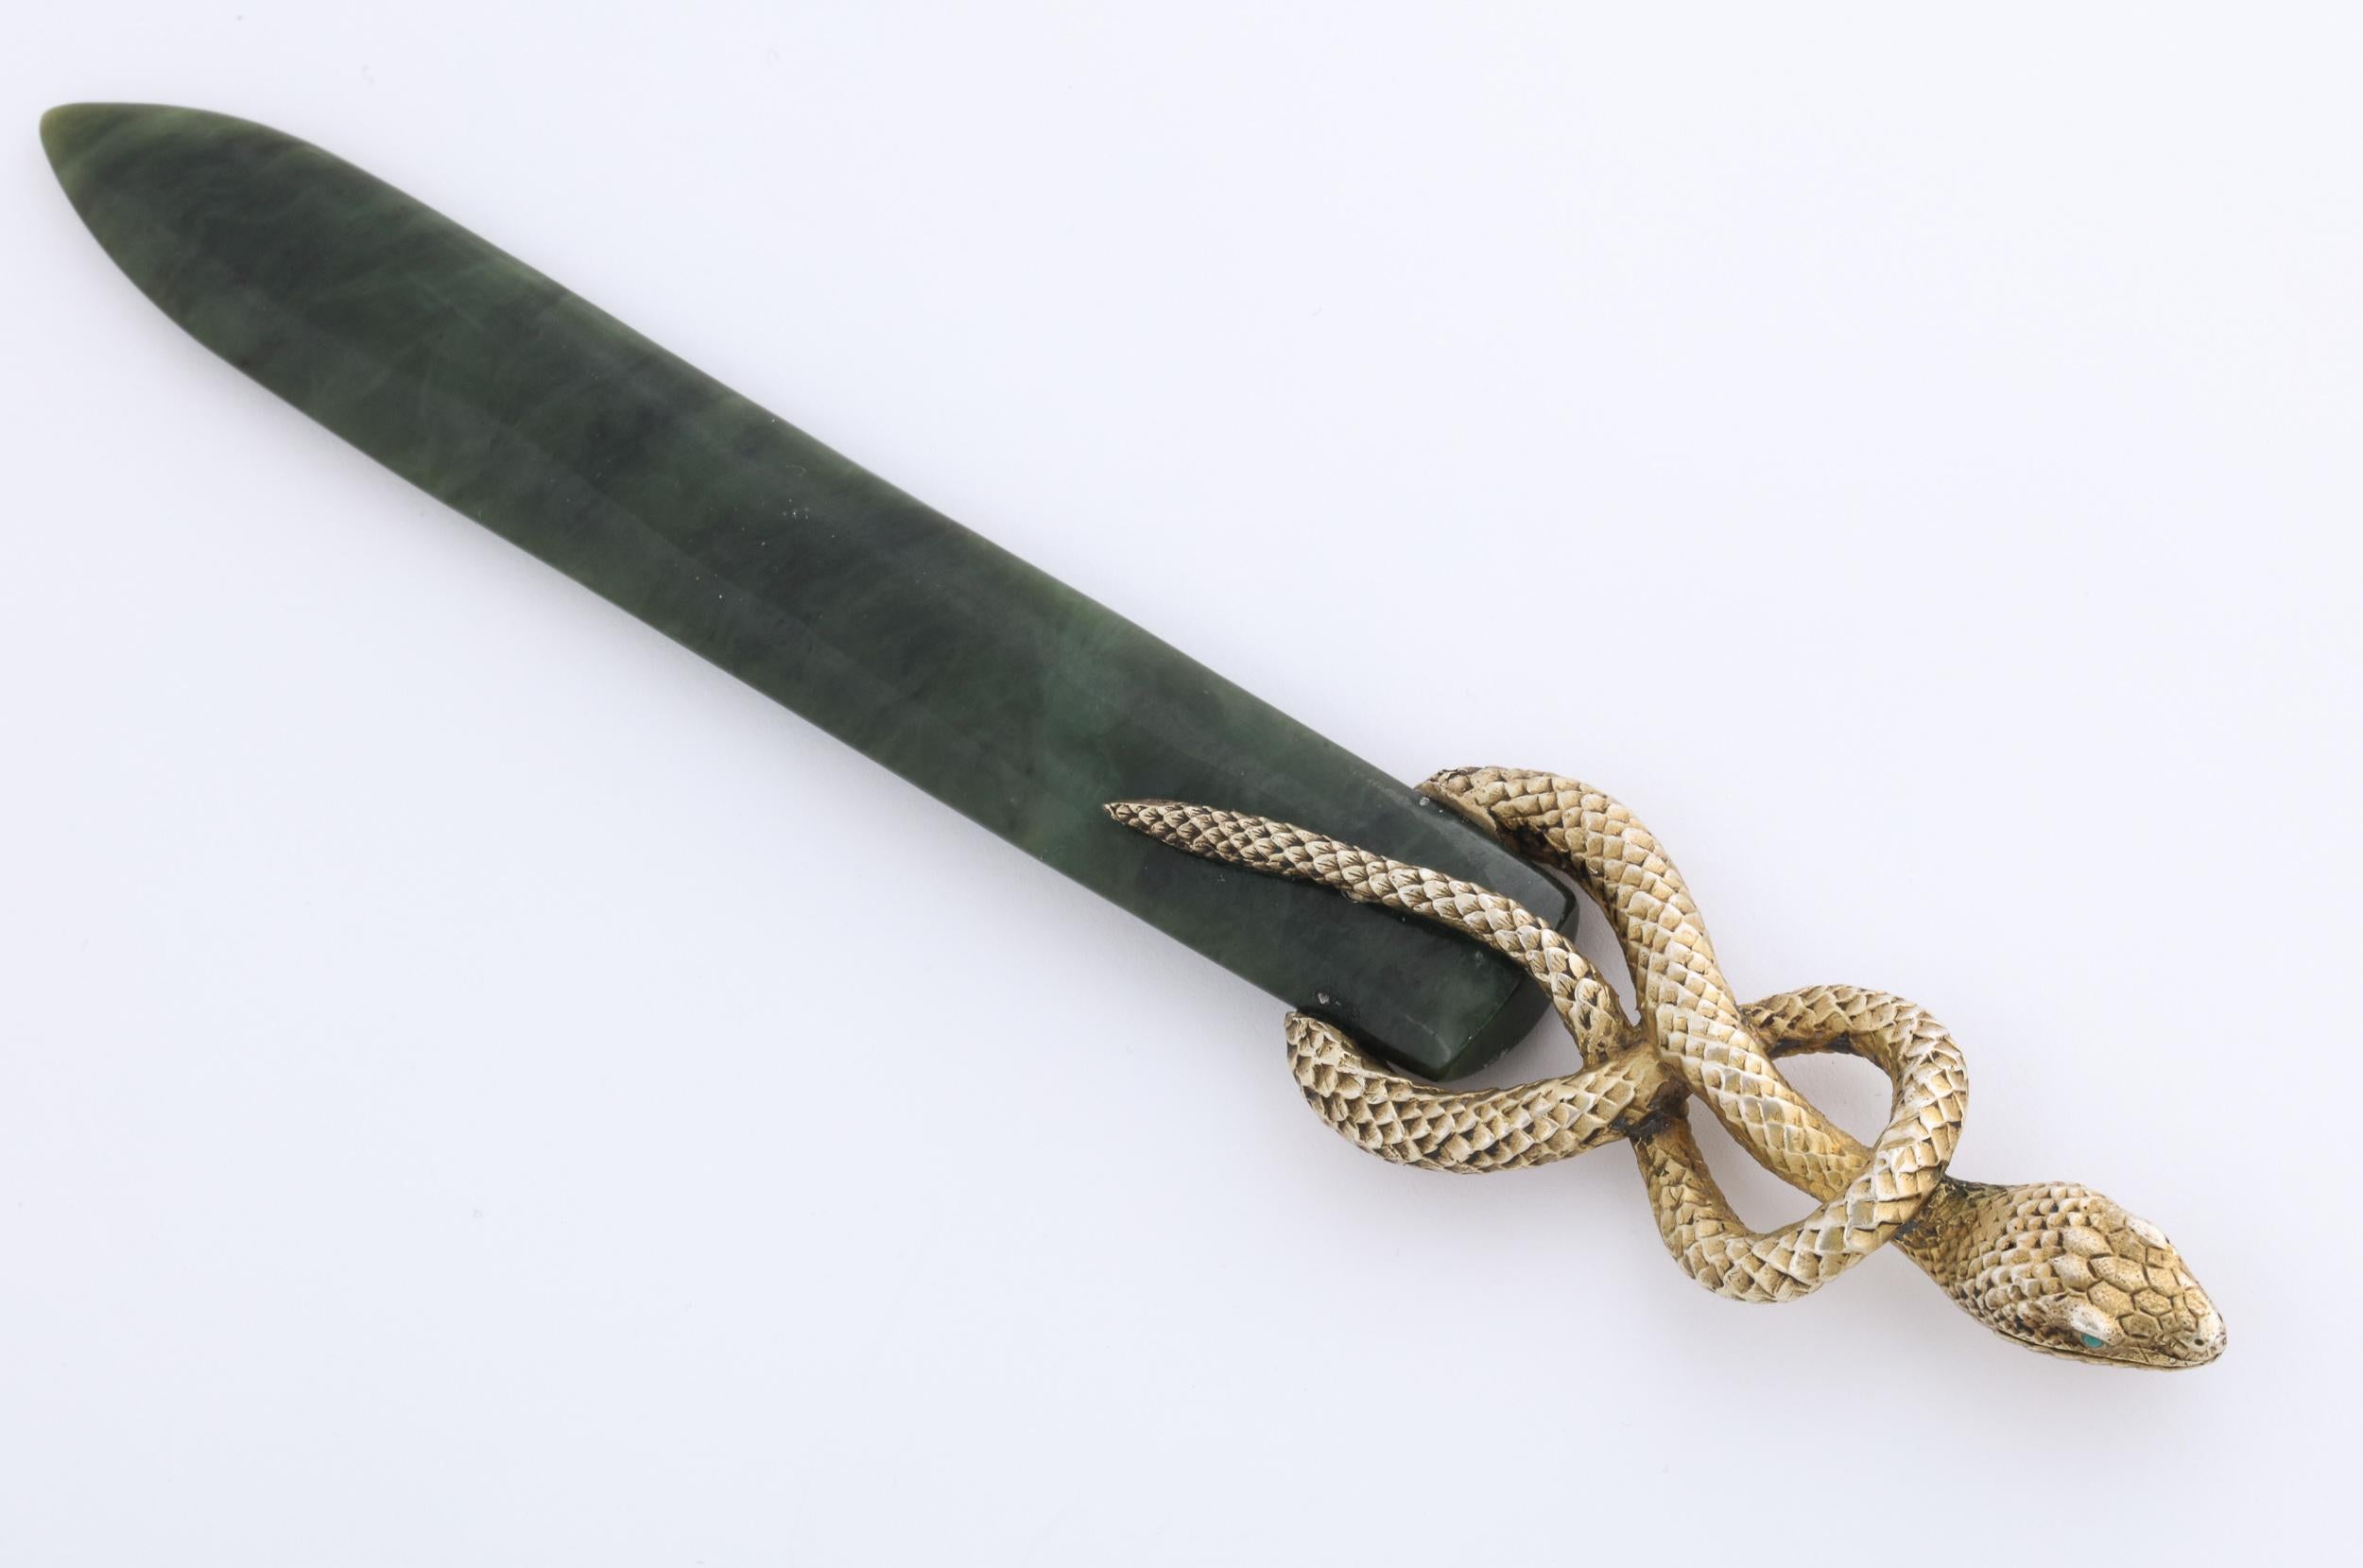 19th Century Antique Russian Silver-Gilt Mounted Snake Handled Nephrite Jade Letter Opener